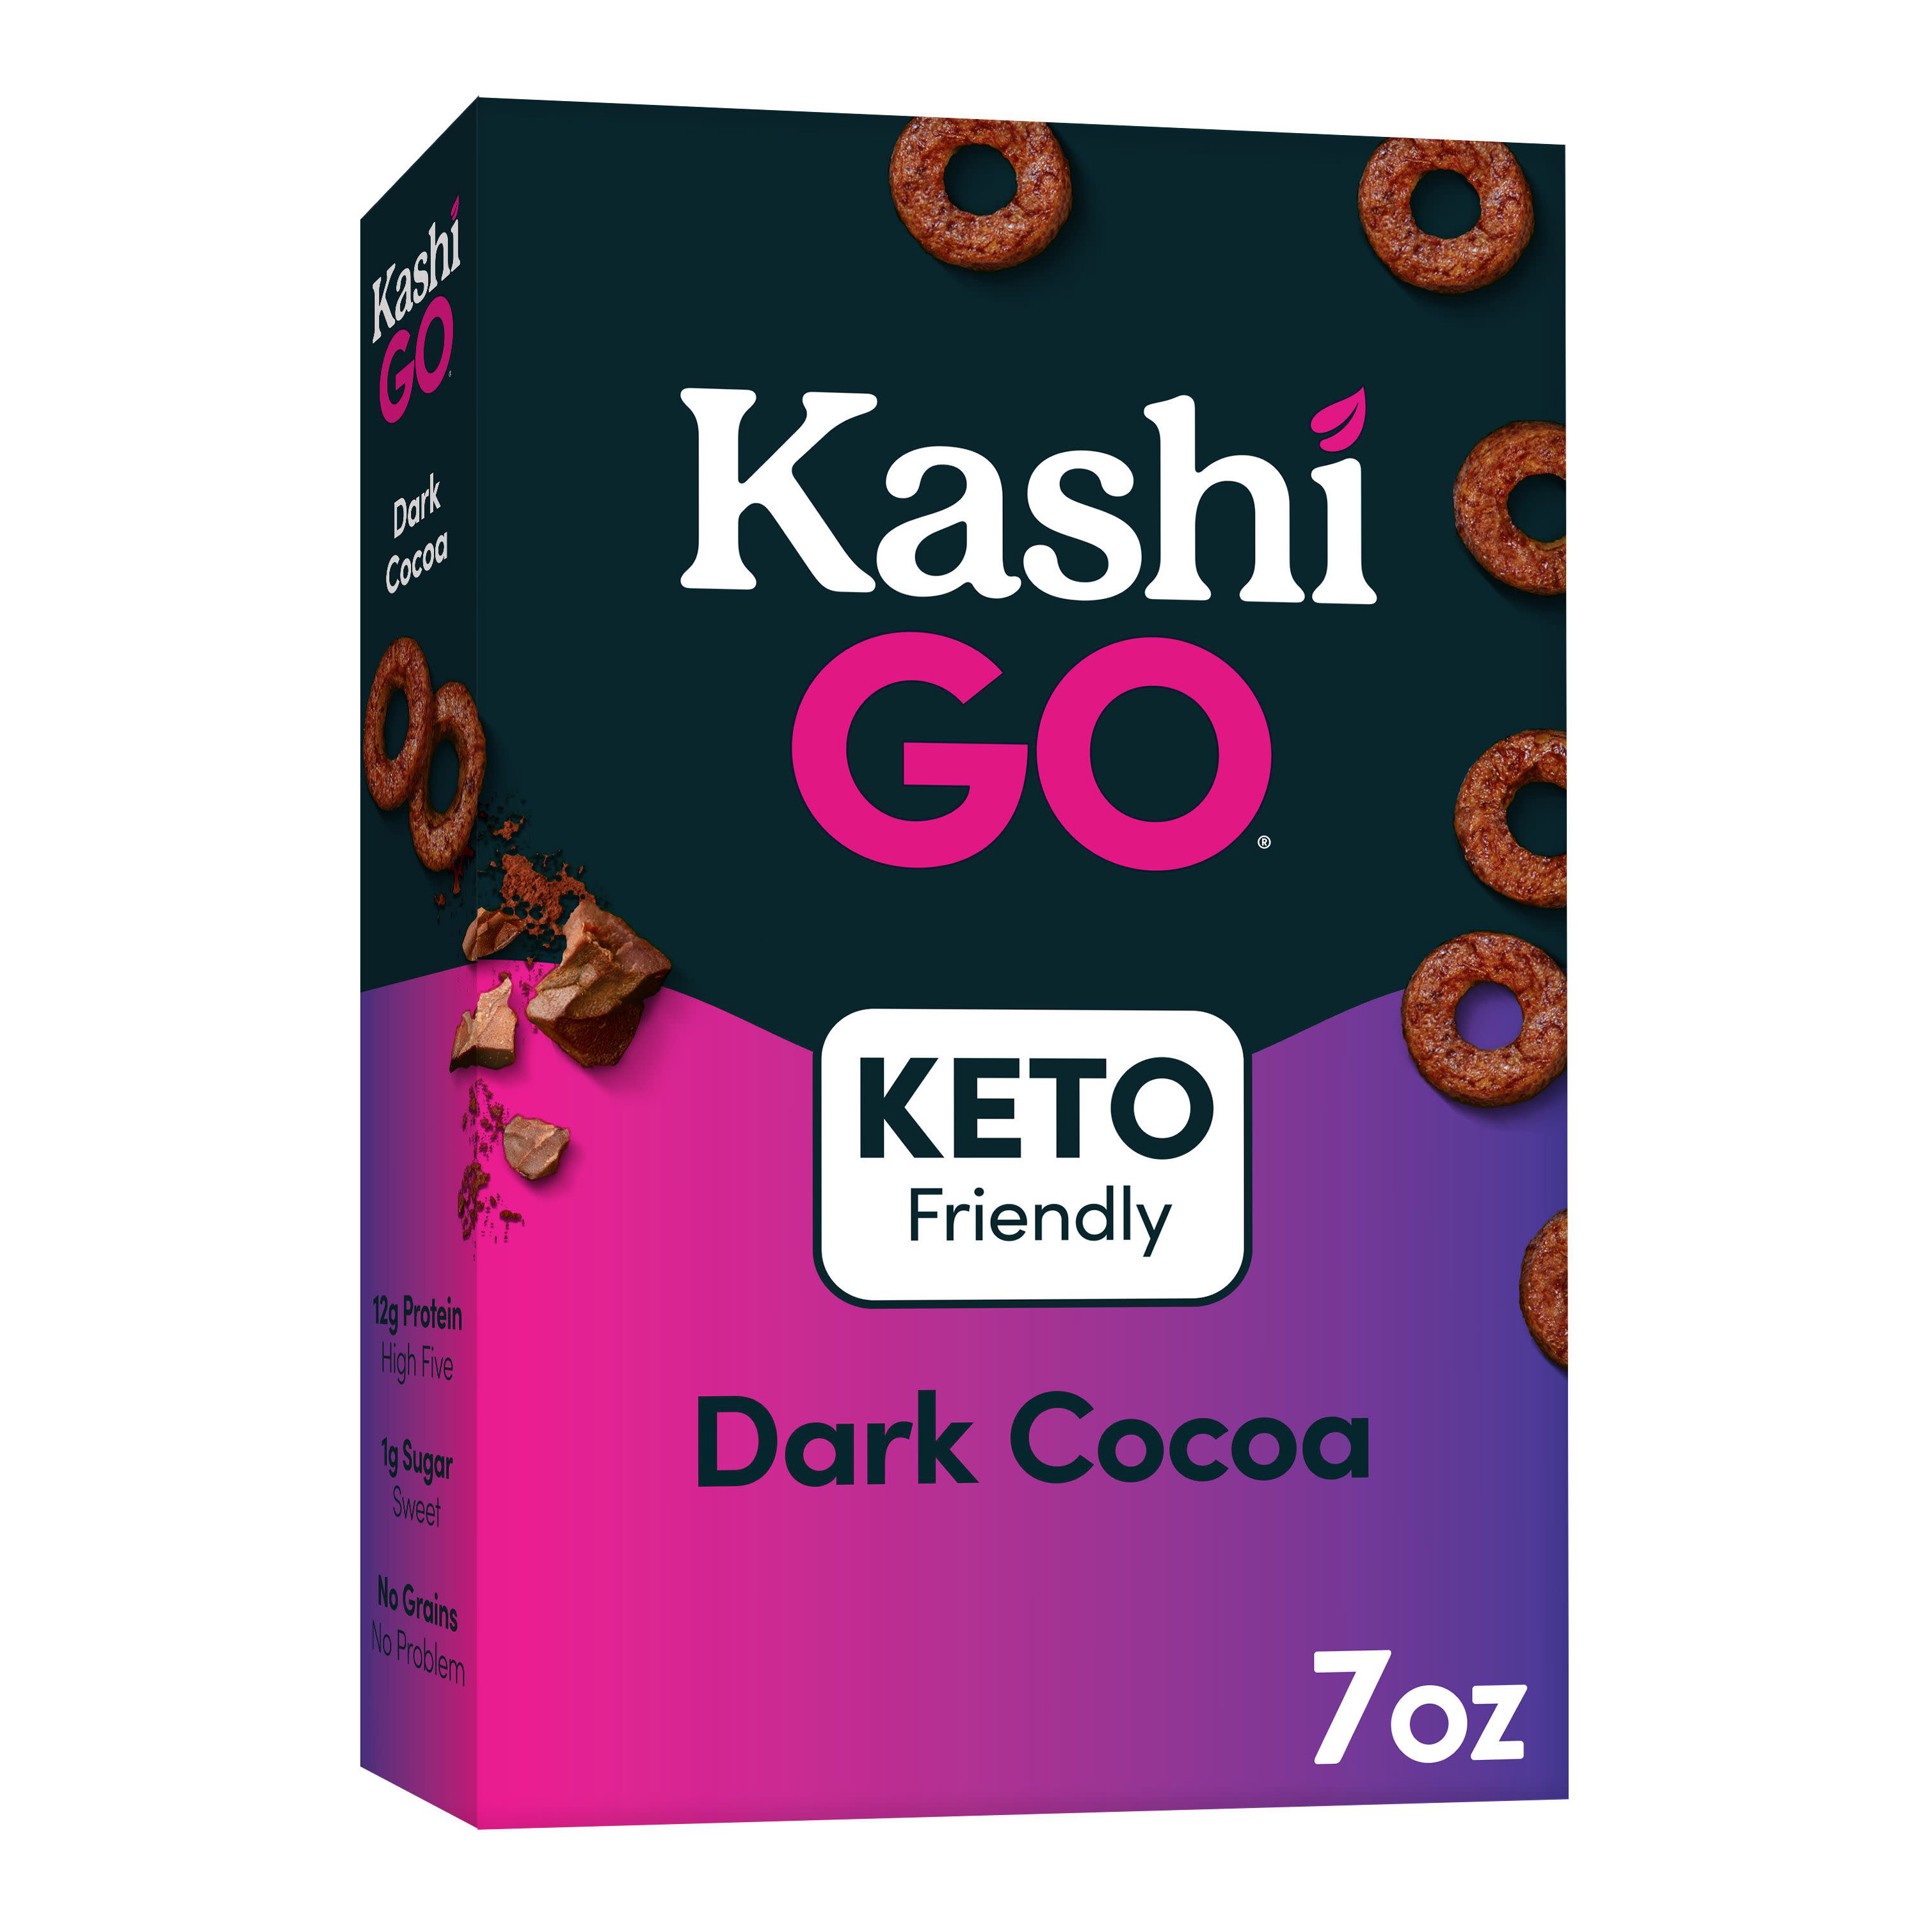 slide 1 of 5, Kashi GO Breakfast Cereal, Vegan Protein, Keto Friendly Cereal, Dark Cocoa, 7oz Box, 1 Box, 7 oz